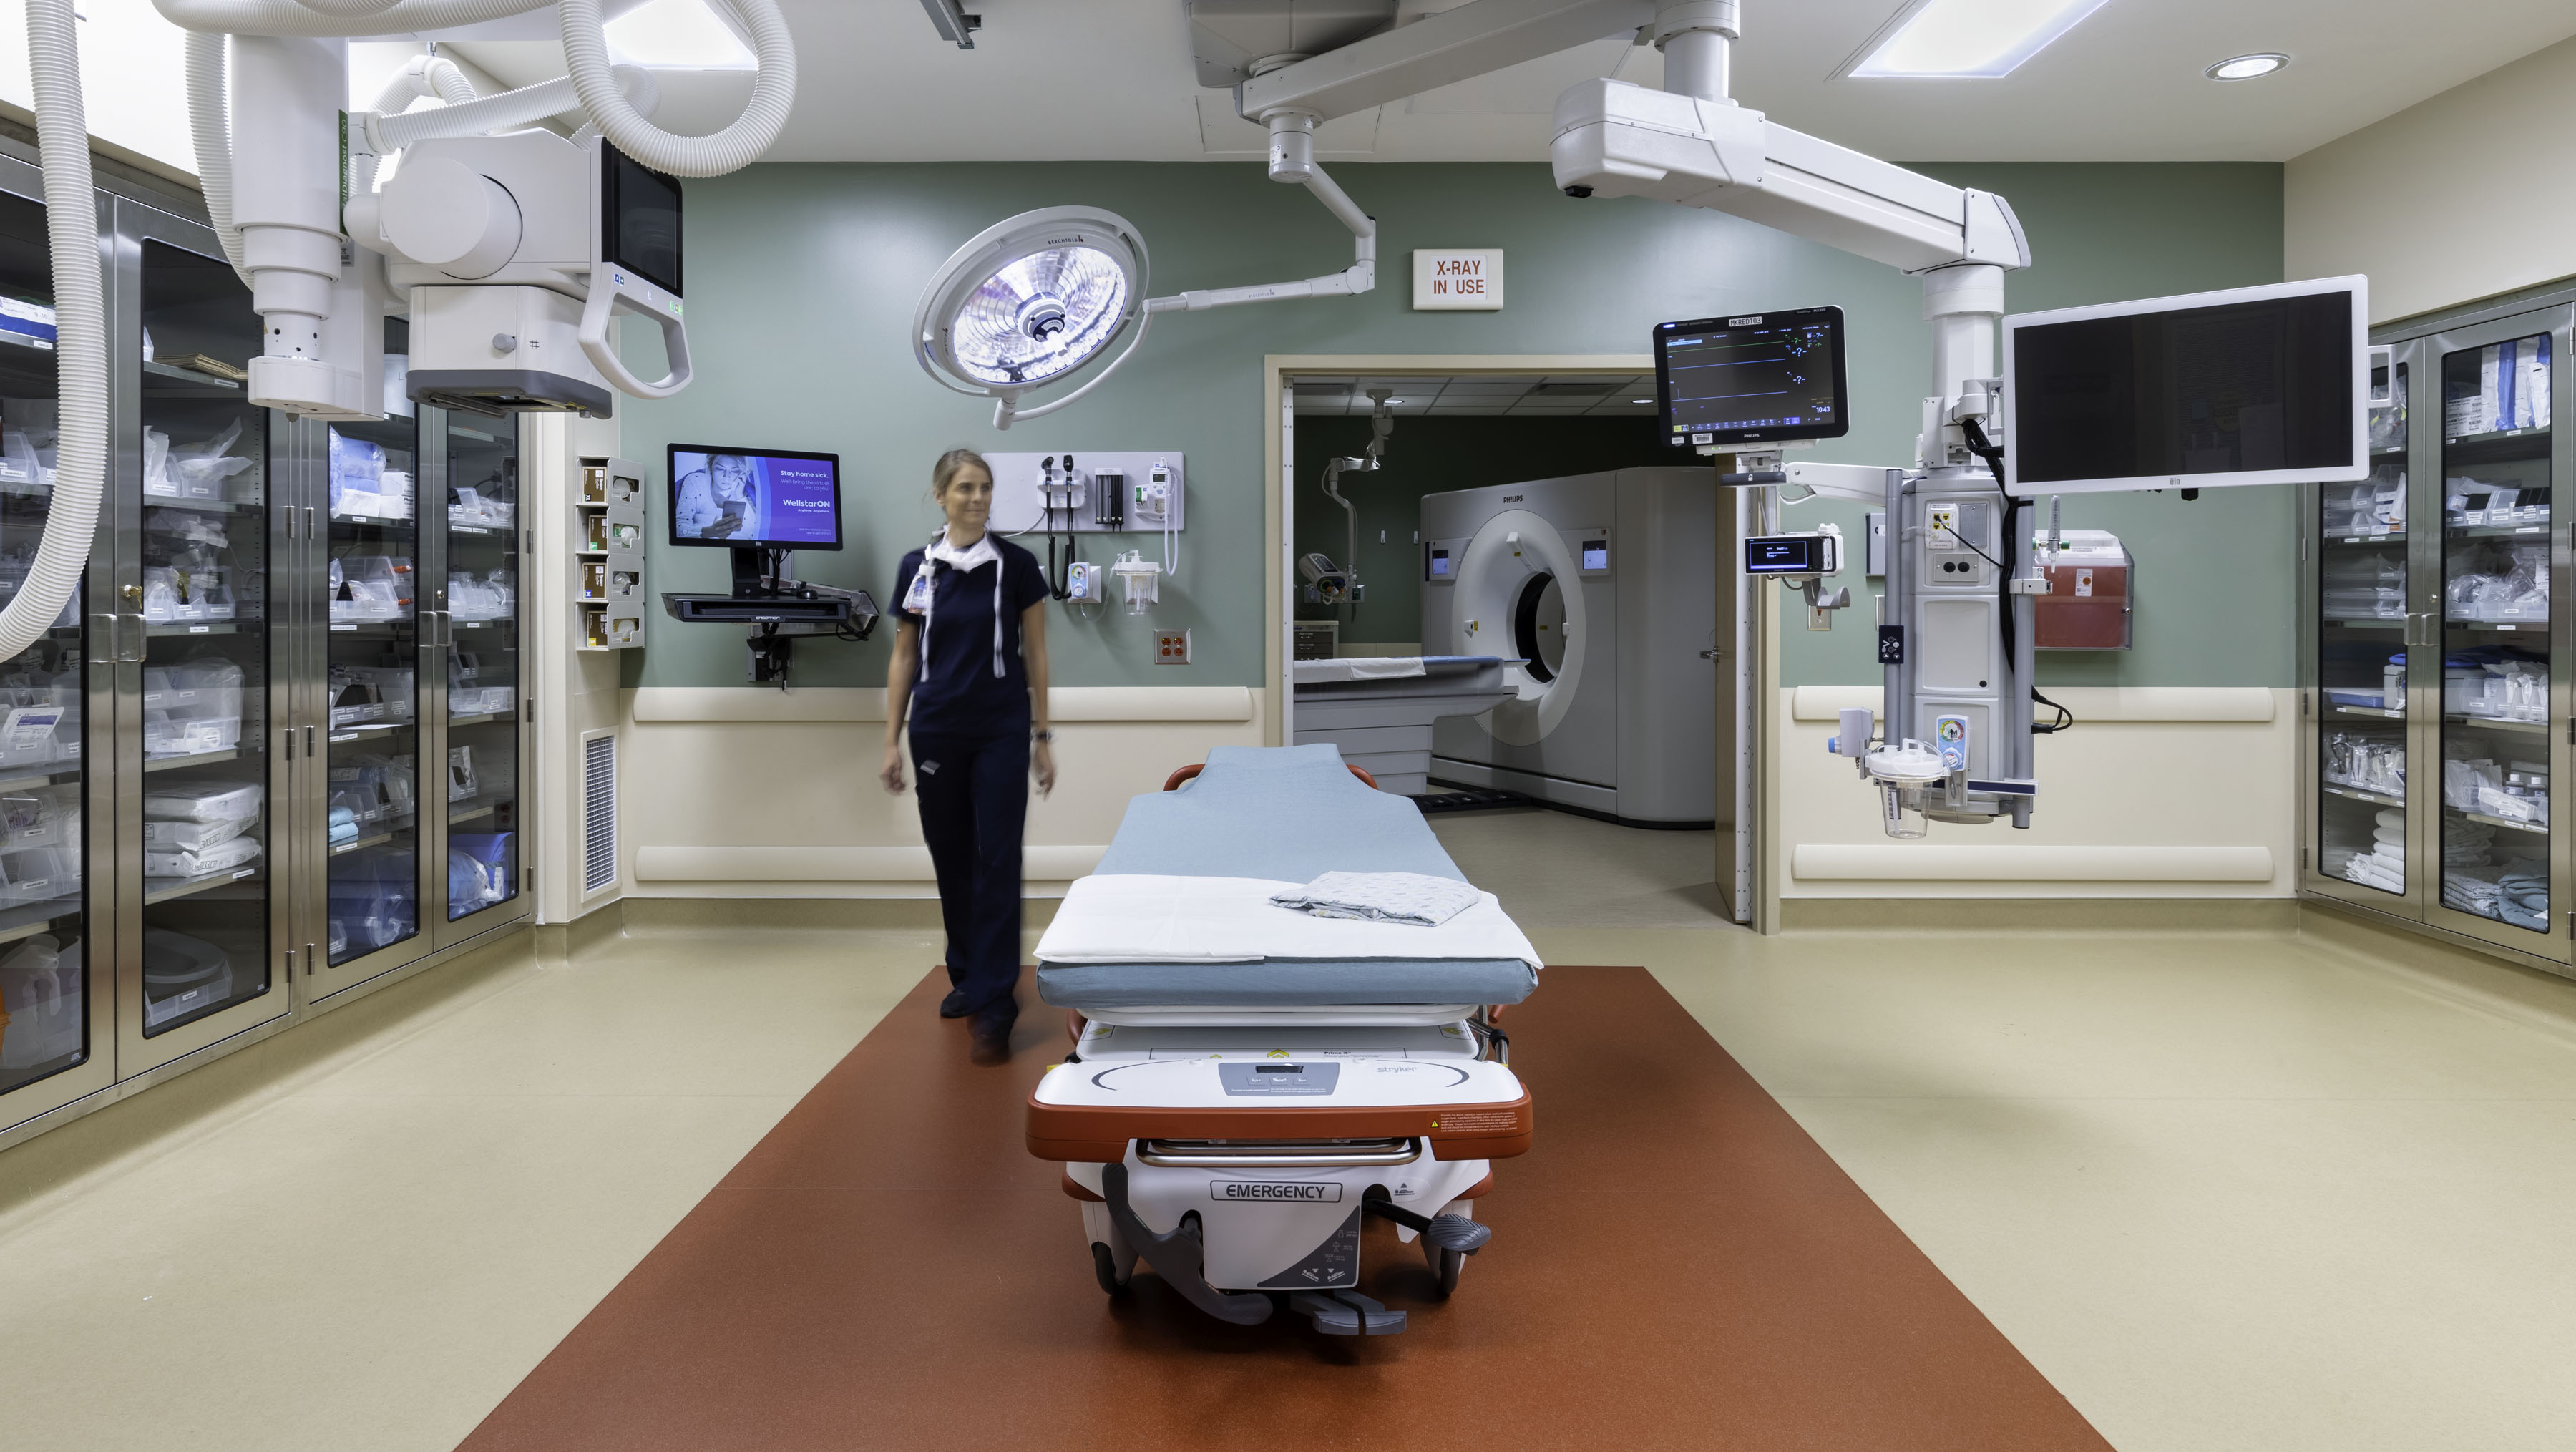 An inside look of a trauma operating room at Wellstar Kennestone Emergency Department 